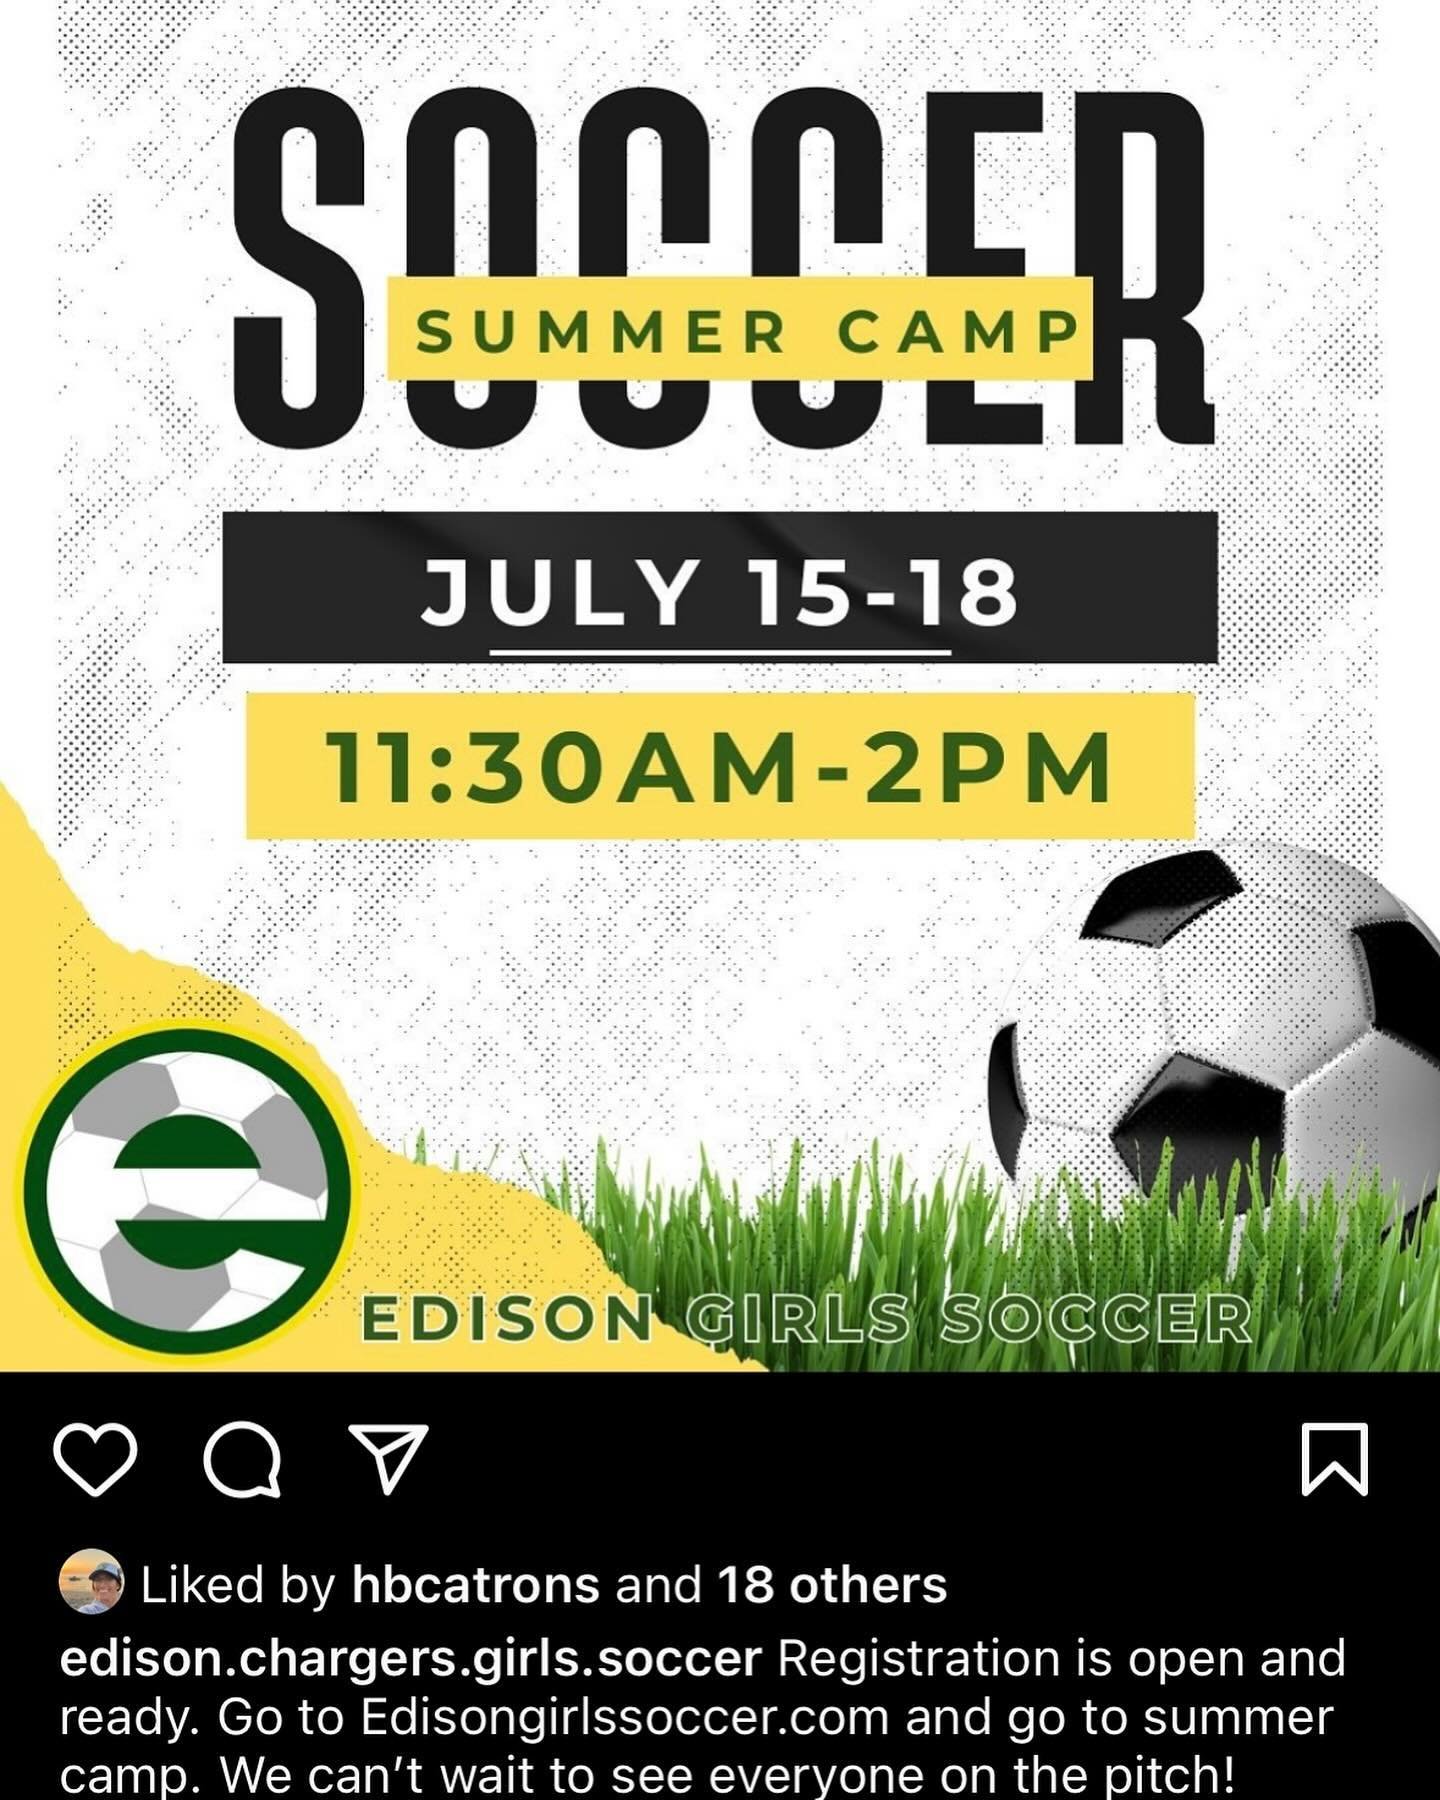 Attention 8th Grade Girls Soccer Players!! ⚽️

Click the link below to register for the Edison Soccer Summer Camp July 15-18!

https://docs.google.com/forms/d/e/1FAIpQLScf2Aqt22JCcbGfvzYetDHxlDU7ZAODB_6HxmtvQ-aZwB3TMA/viewform